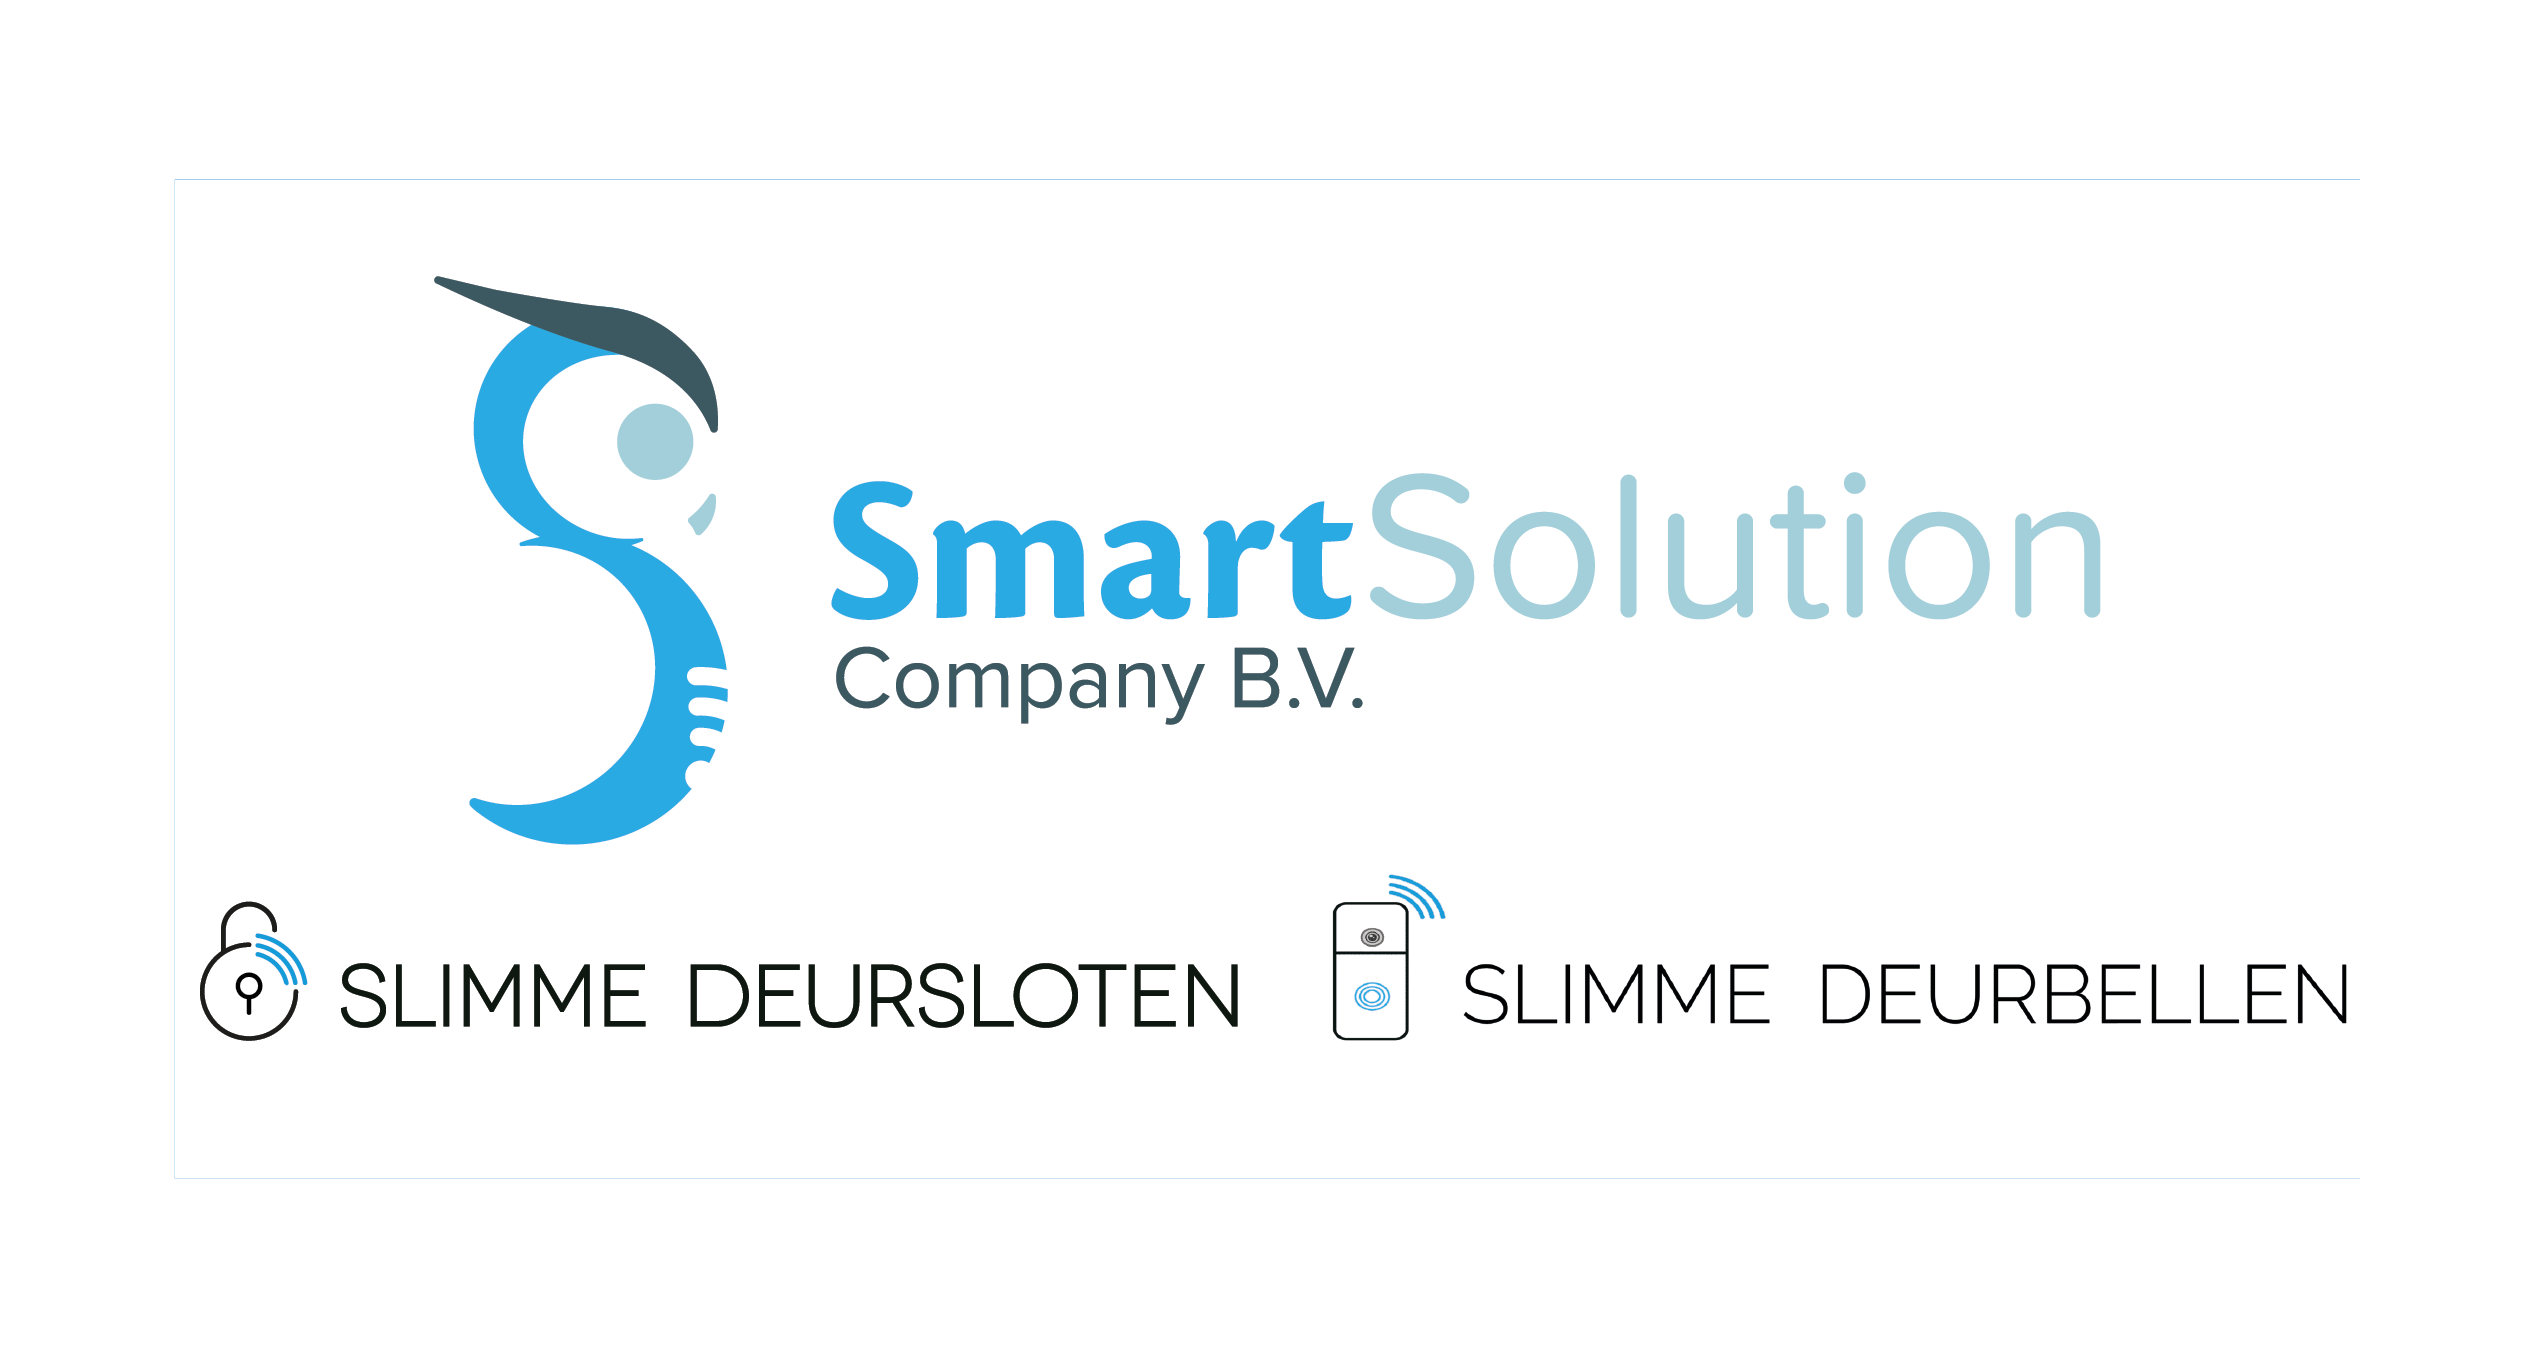 Slimme deursloten / Smart Solution Company